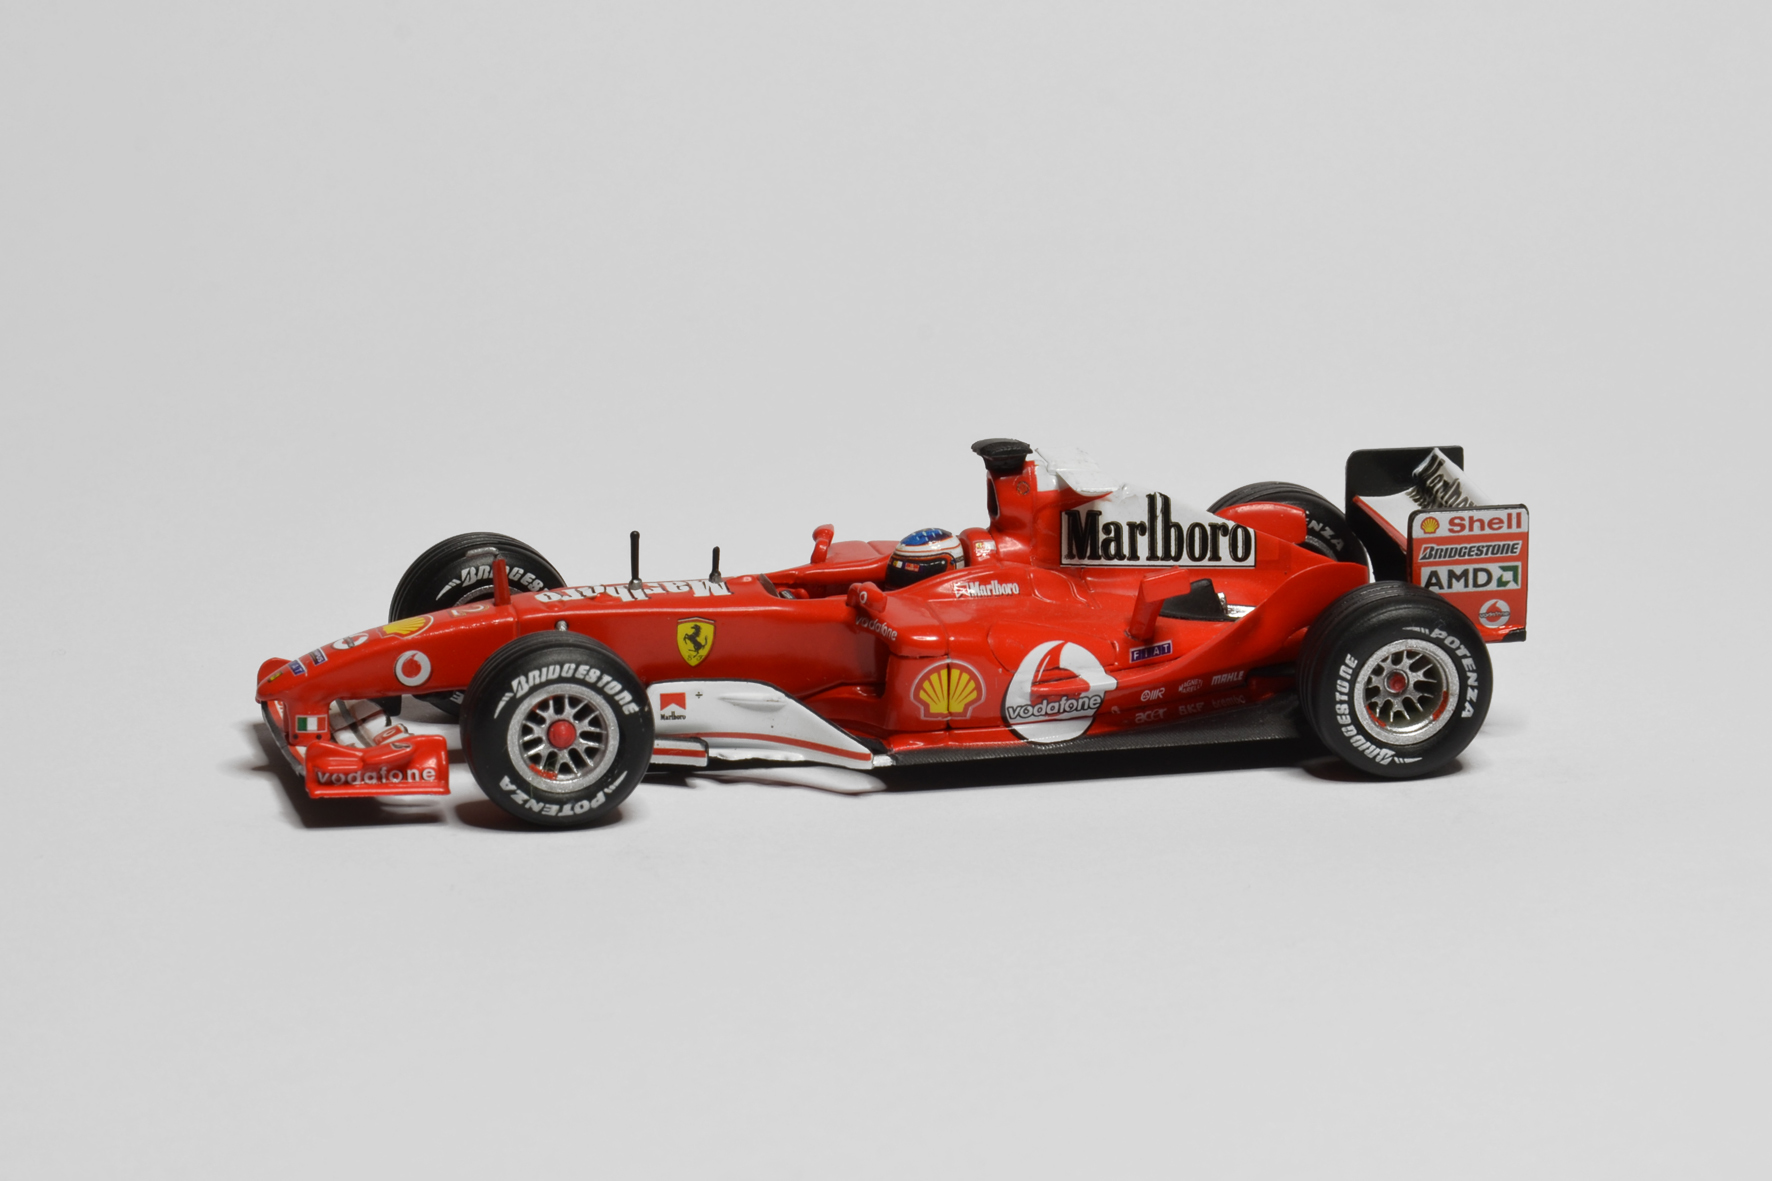 Ferrari F2004 | 2004 | Rubens Barrichello | Hot Wheels